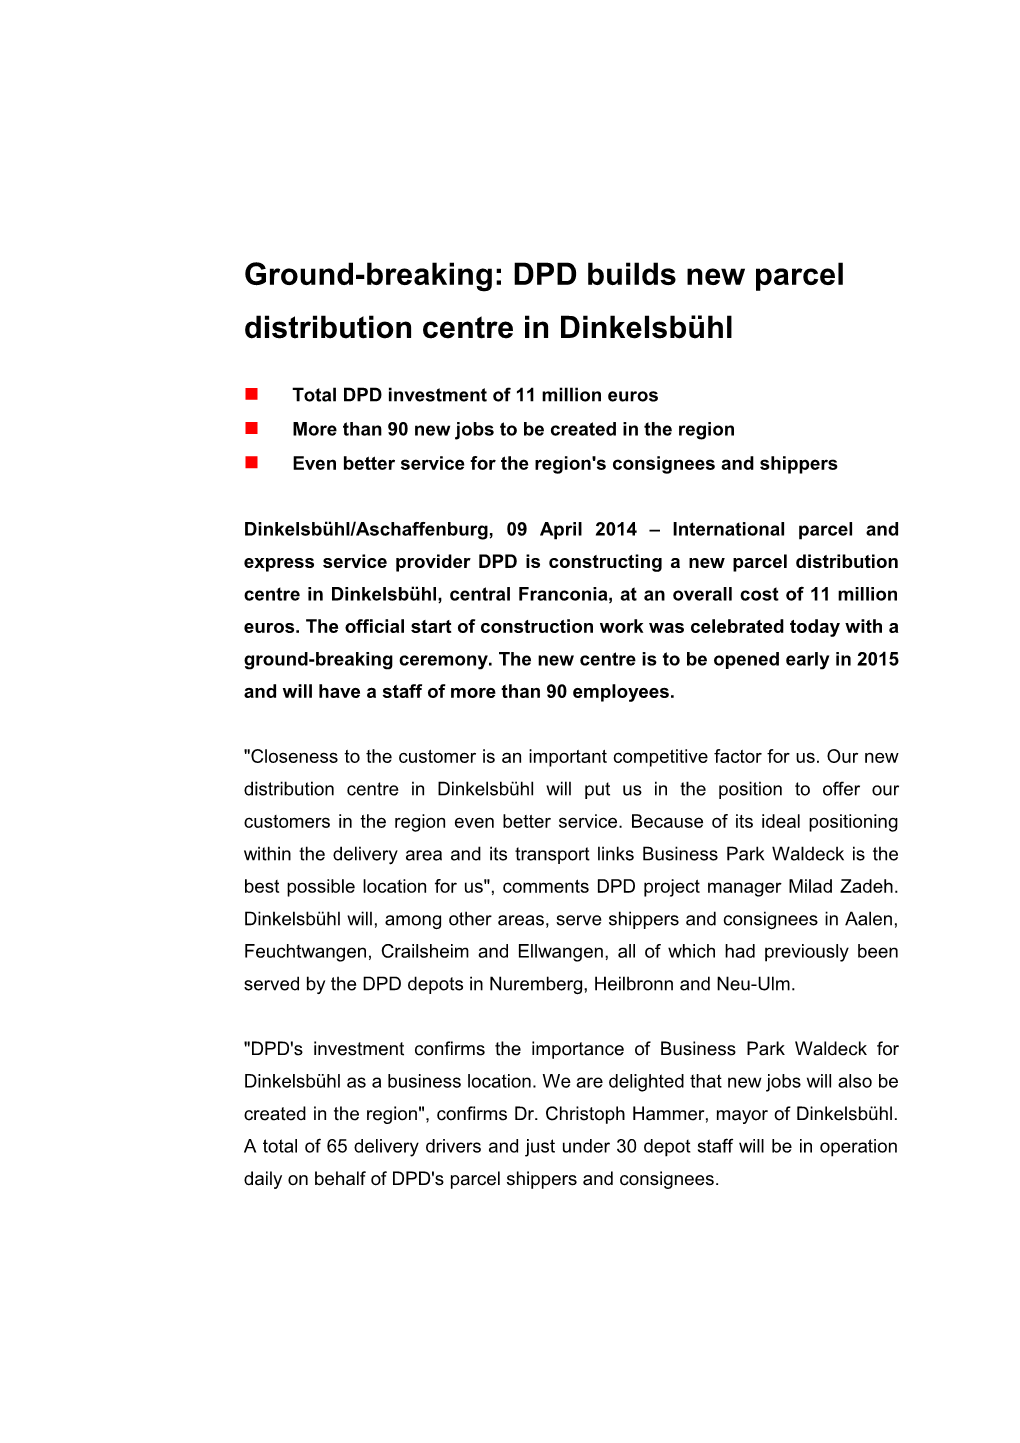 Ground-Breaking: DPD Builds New Parcel Distribution Centre in Dinkelsbühl